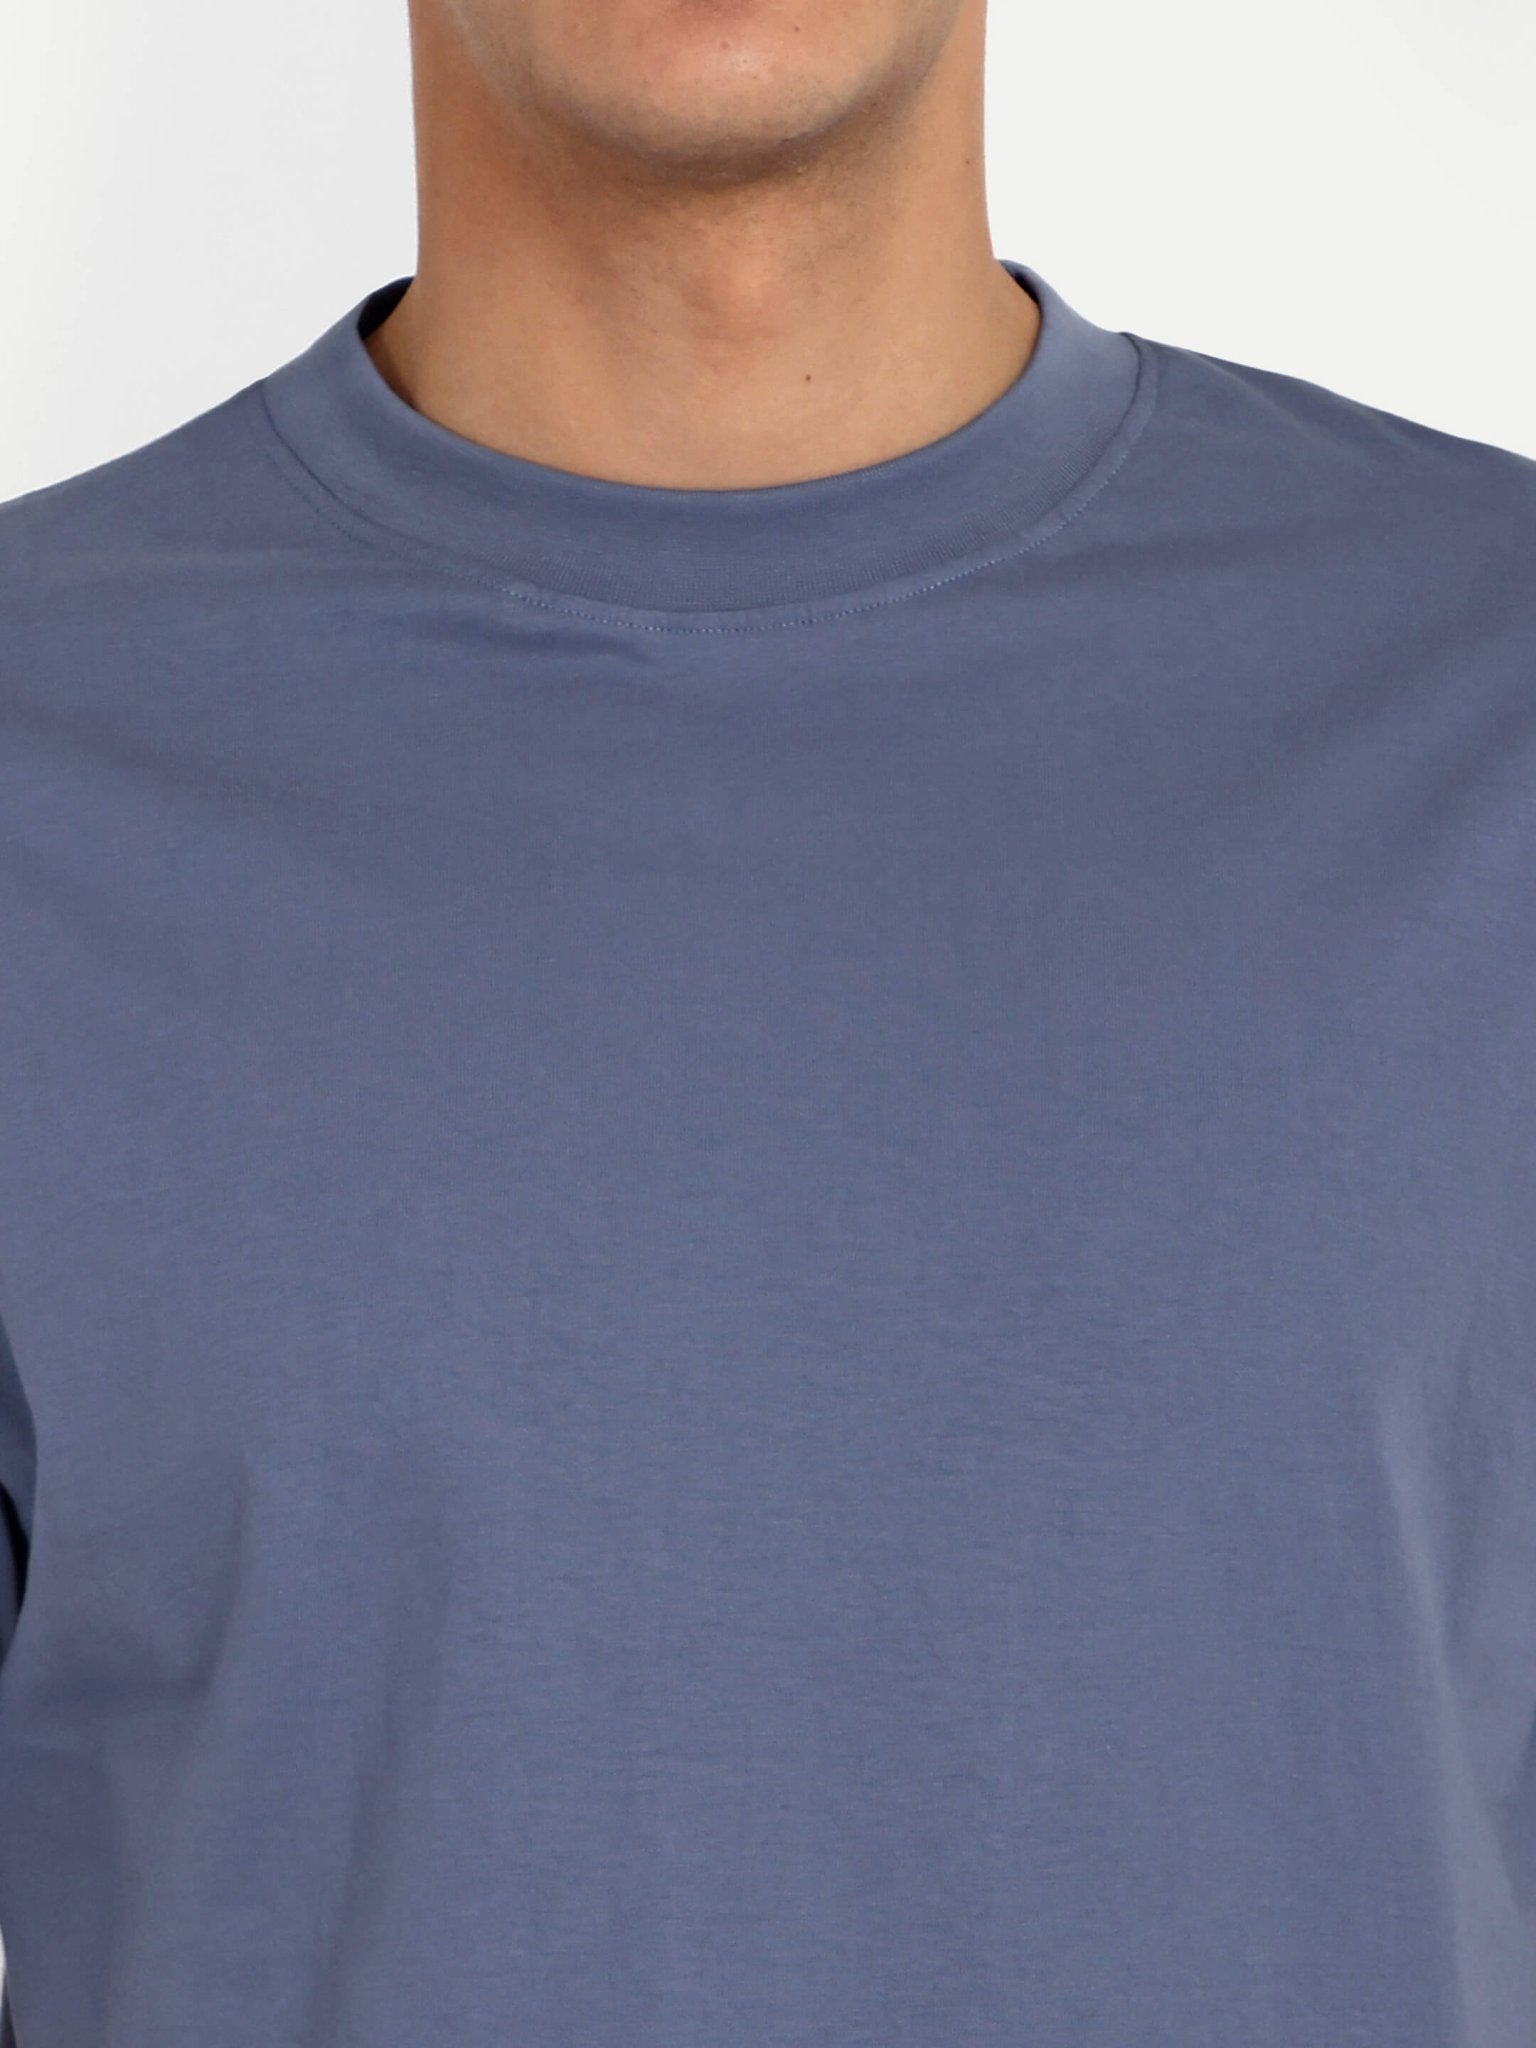 Relaxed Basic T-Shirt - Lavender Blue